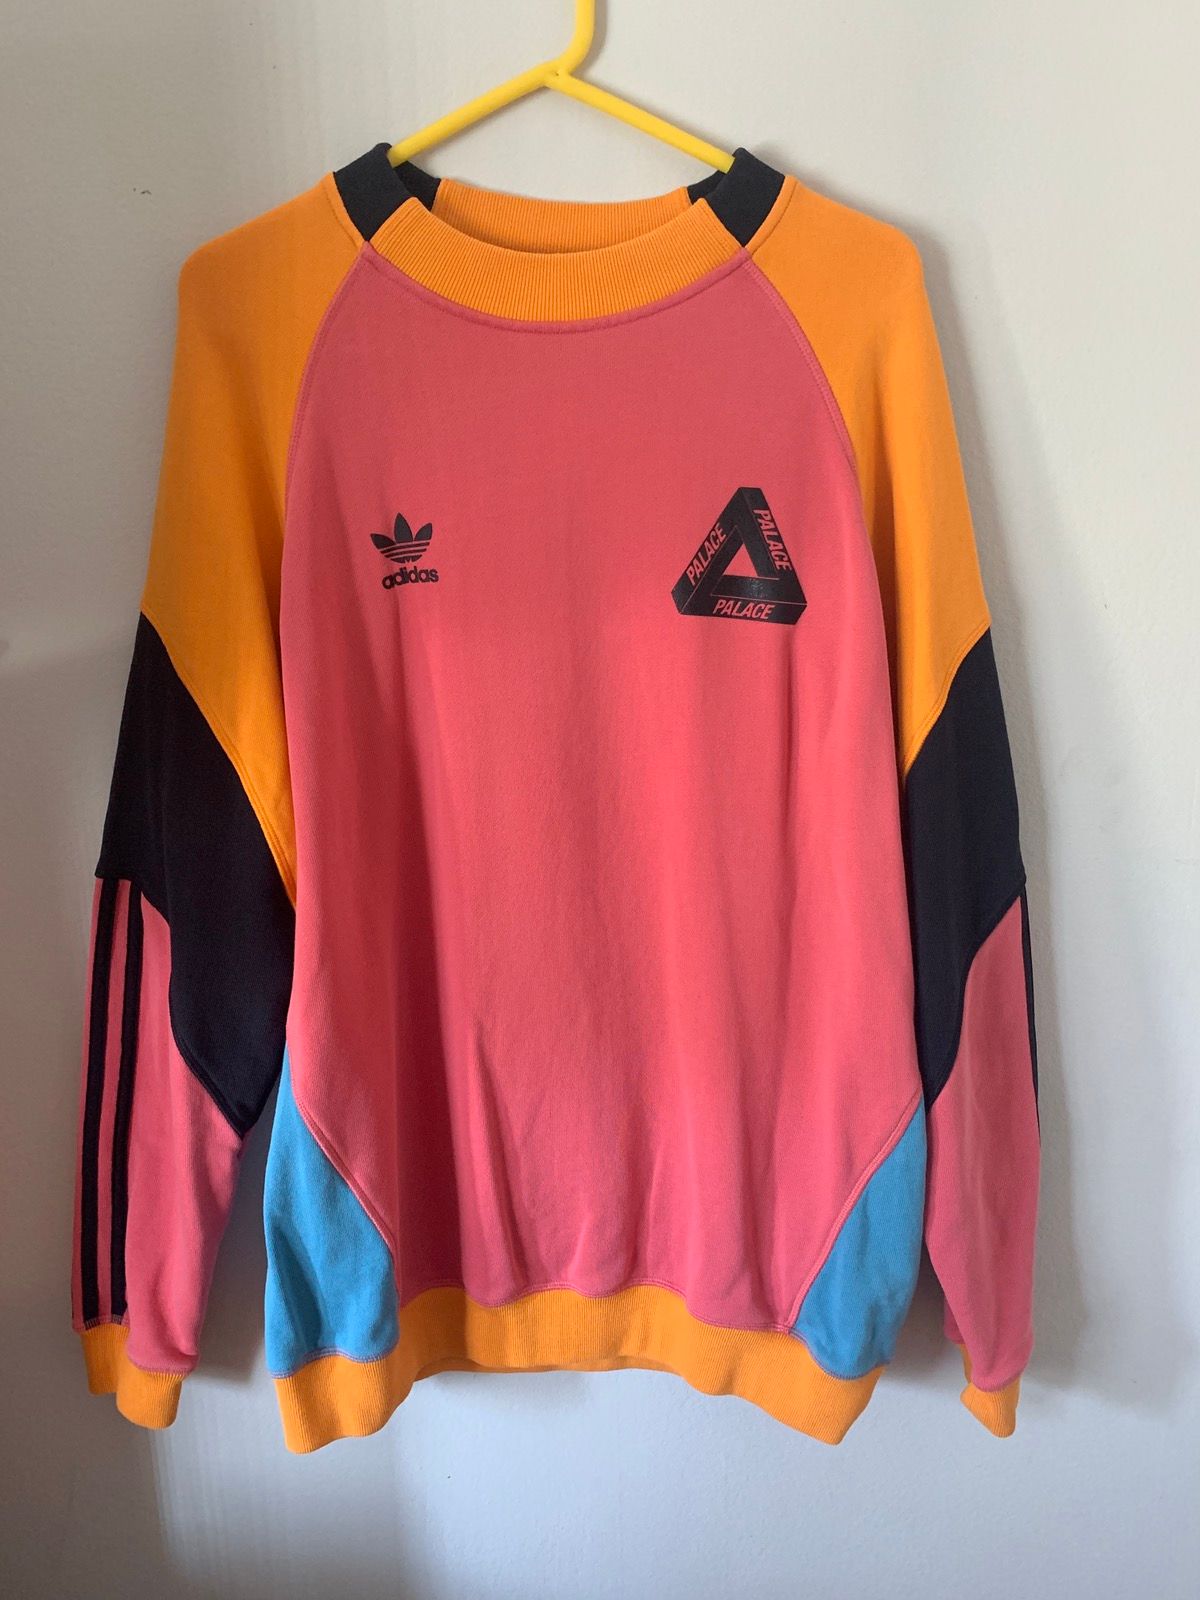 Adidas Palace x sweater lucky orange/pink | Grailed